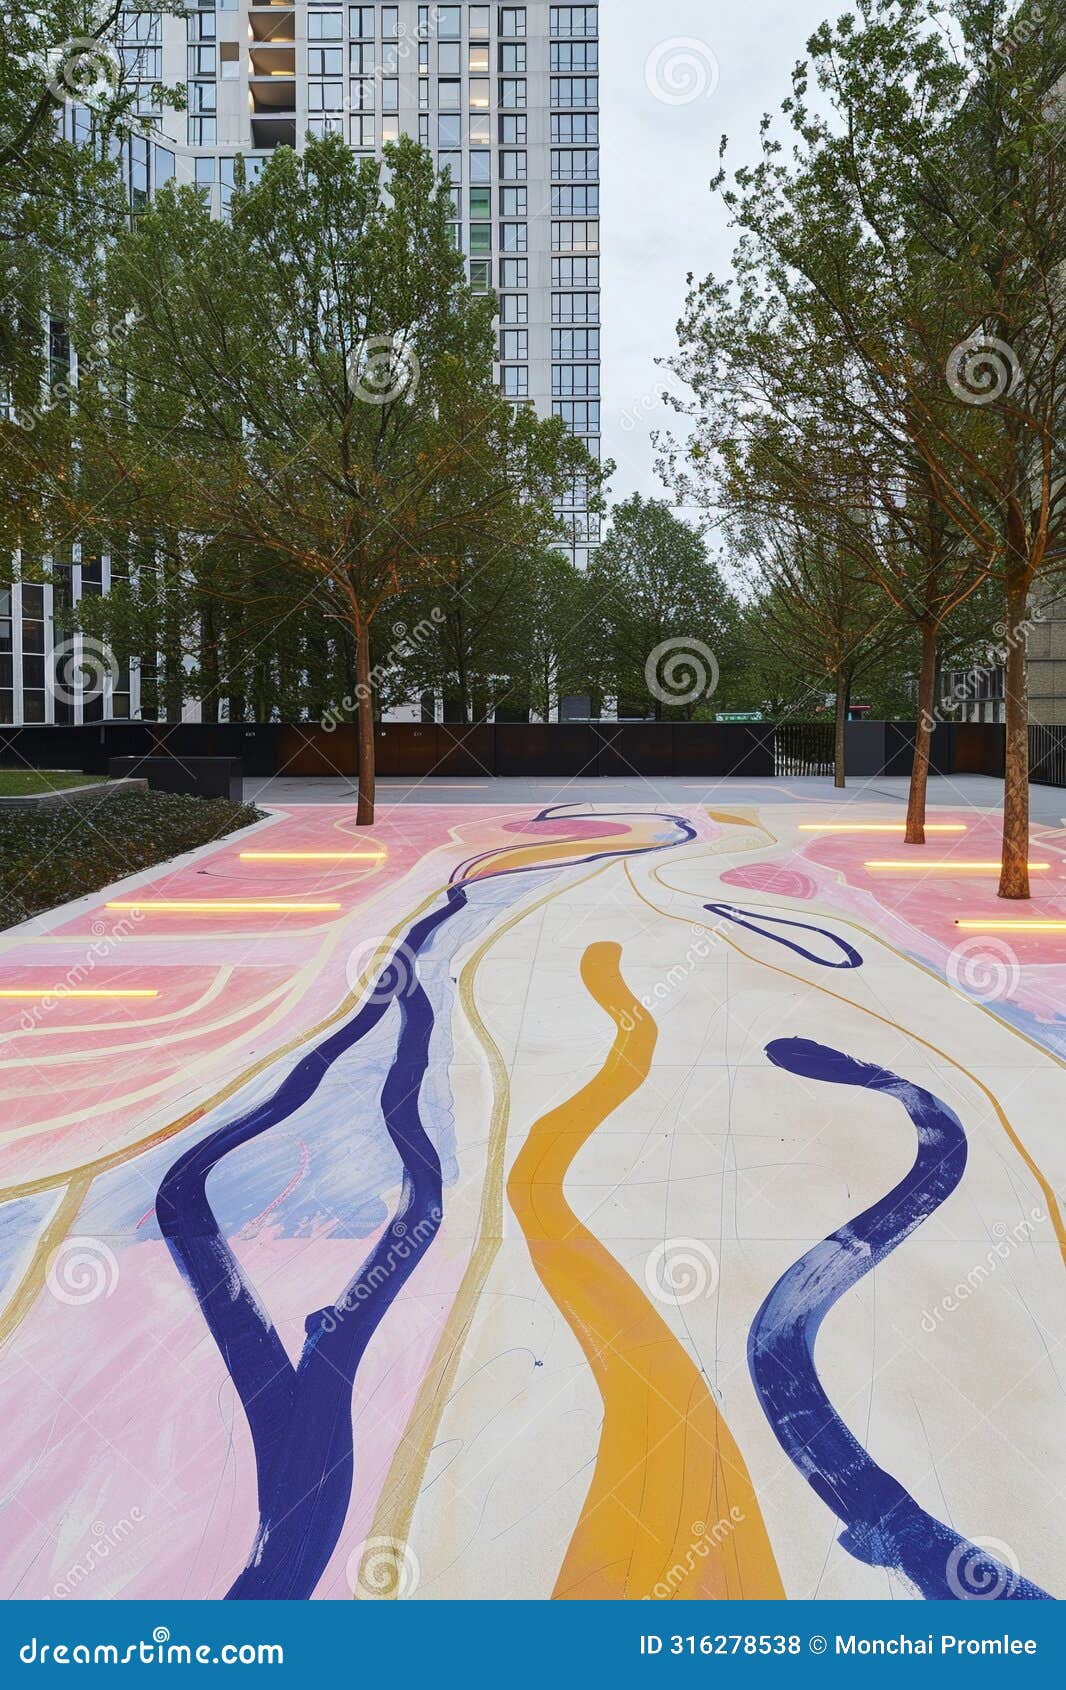 a futuristic city square where kinetic floors convert the silent energy